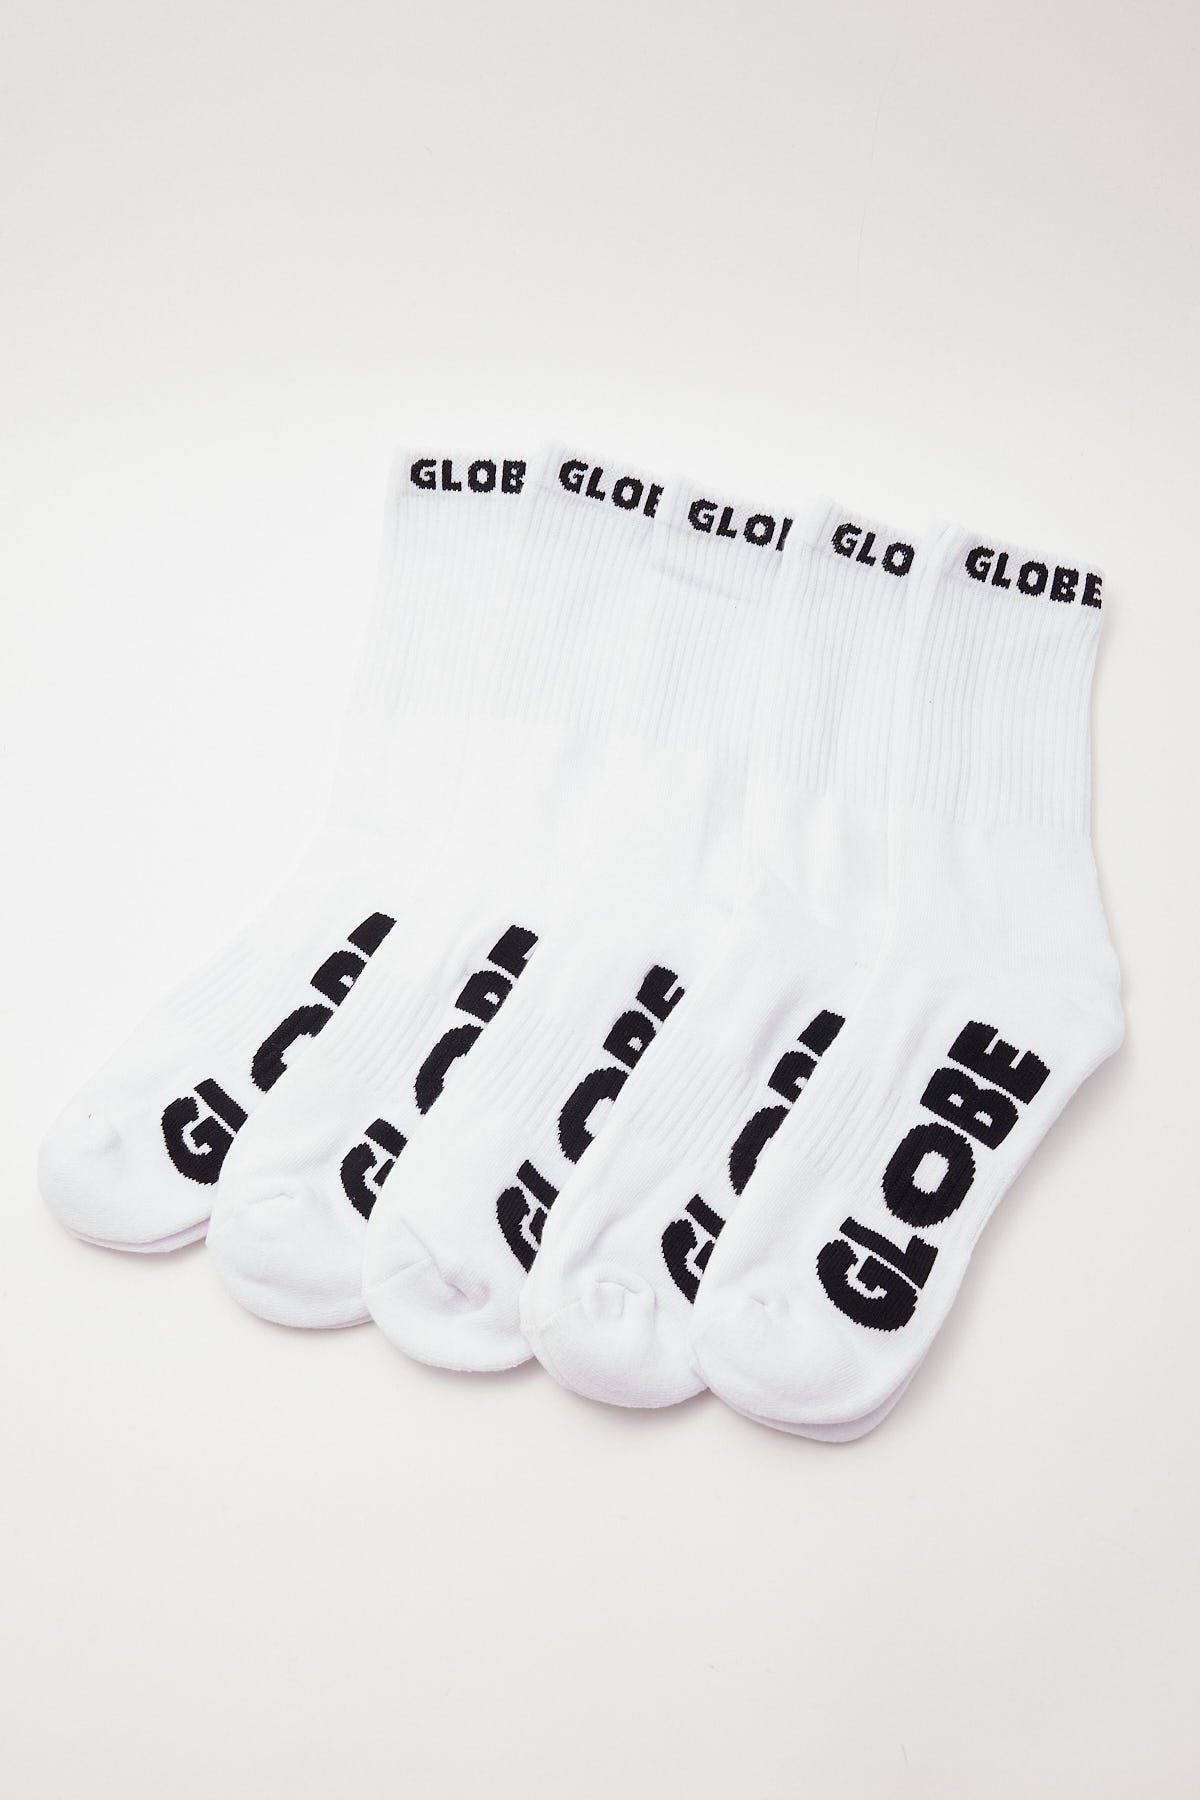 Globe Whiteout Sock 5pk White